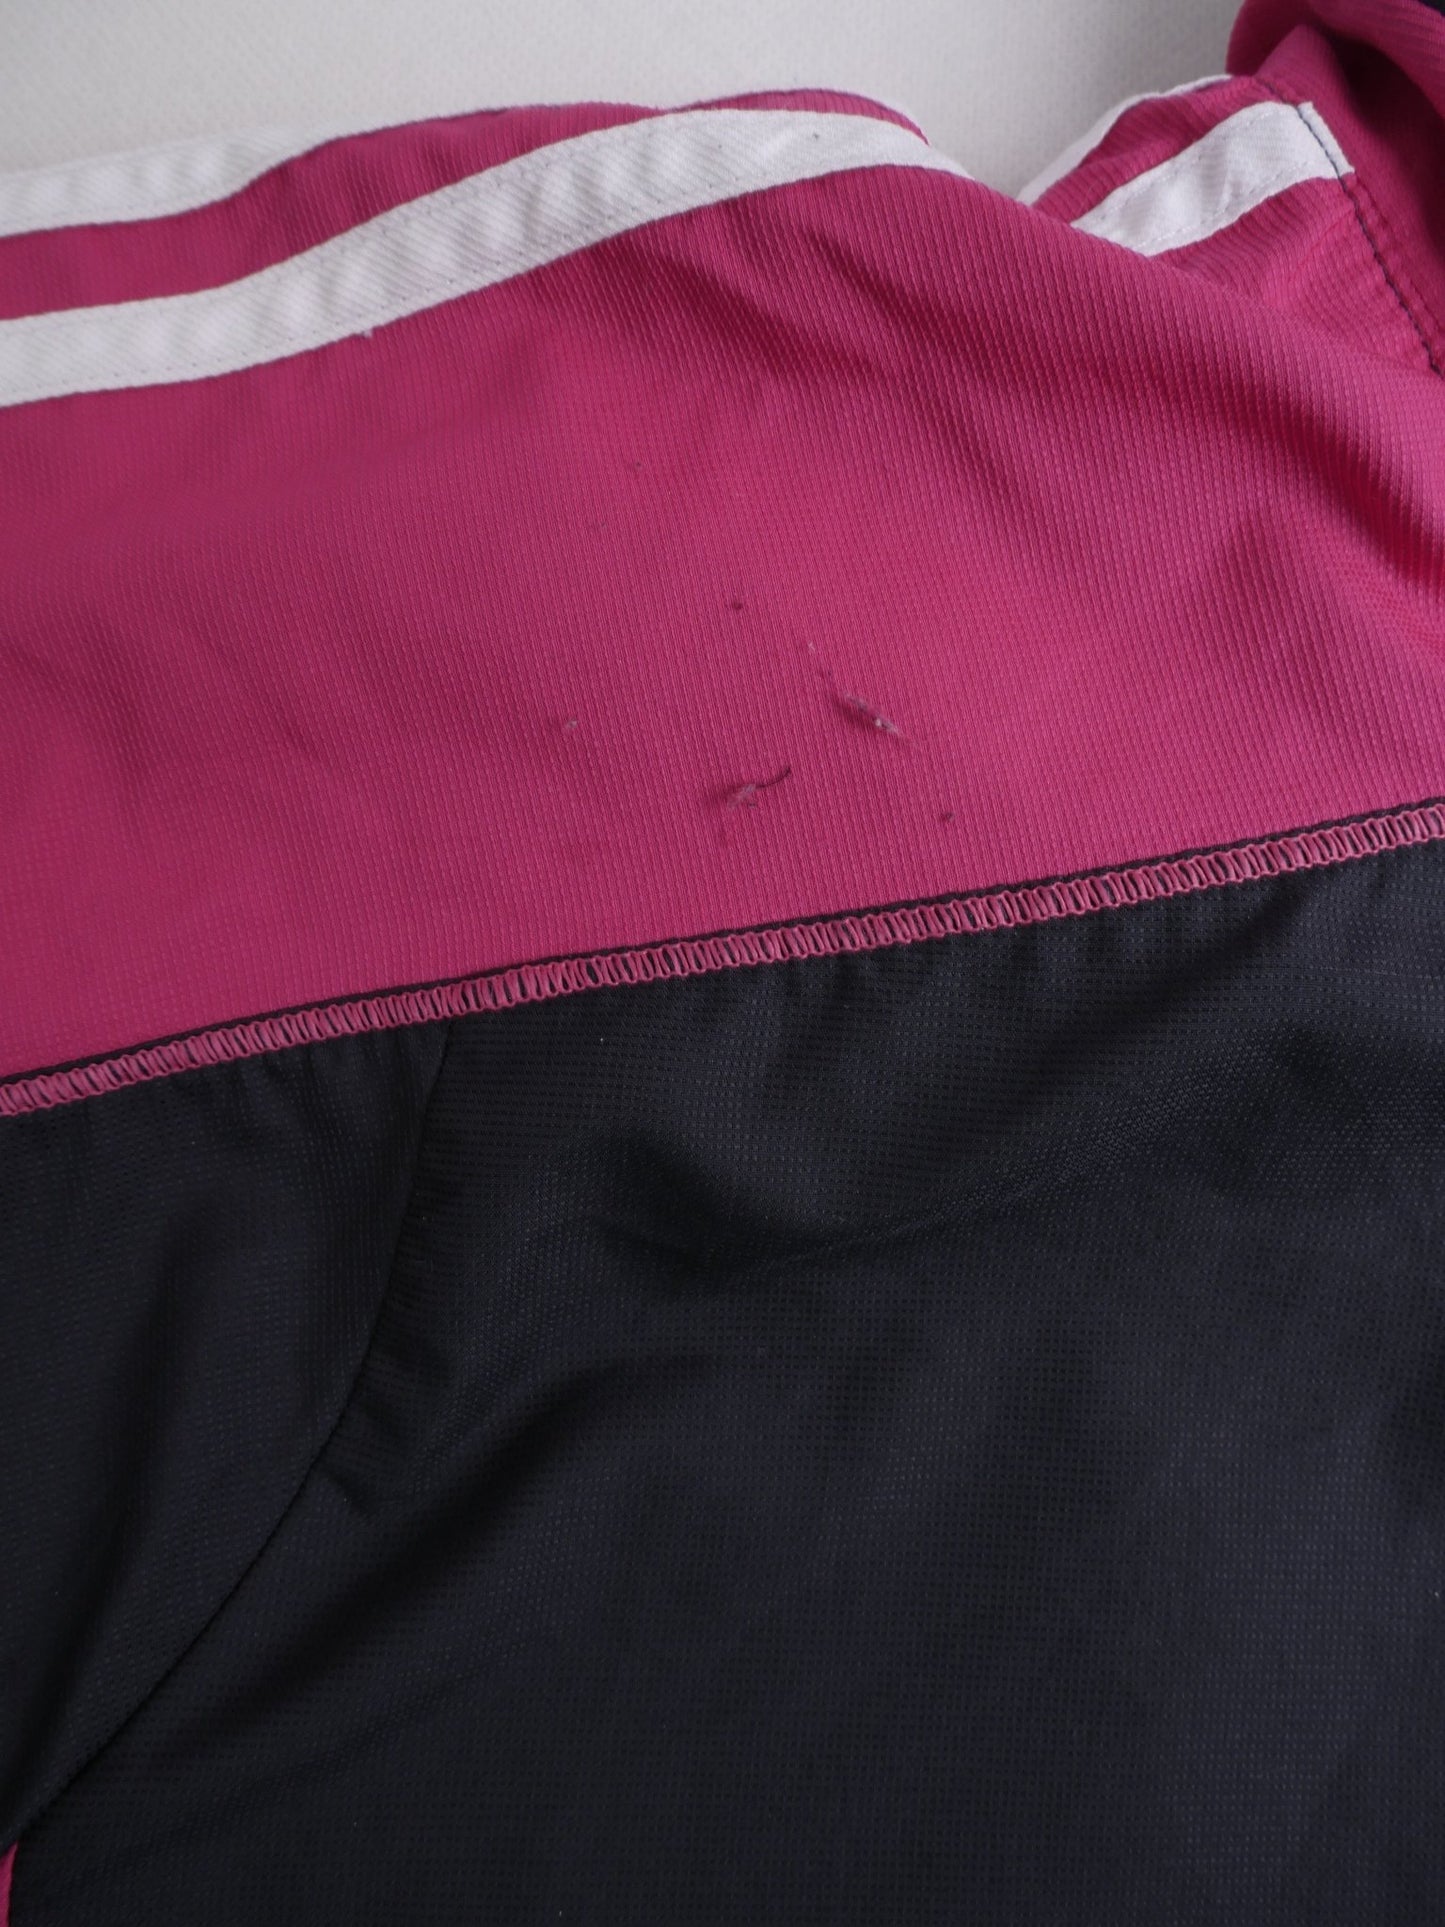 Adidas printed Logo two toned Track Jacket - Peeces